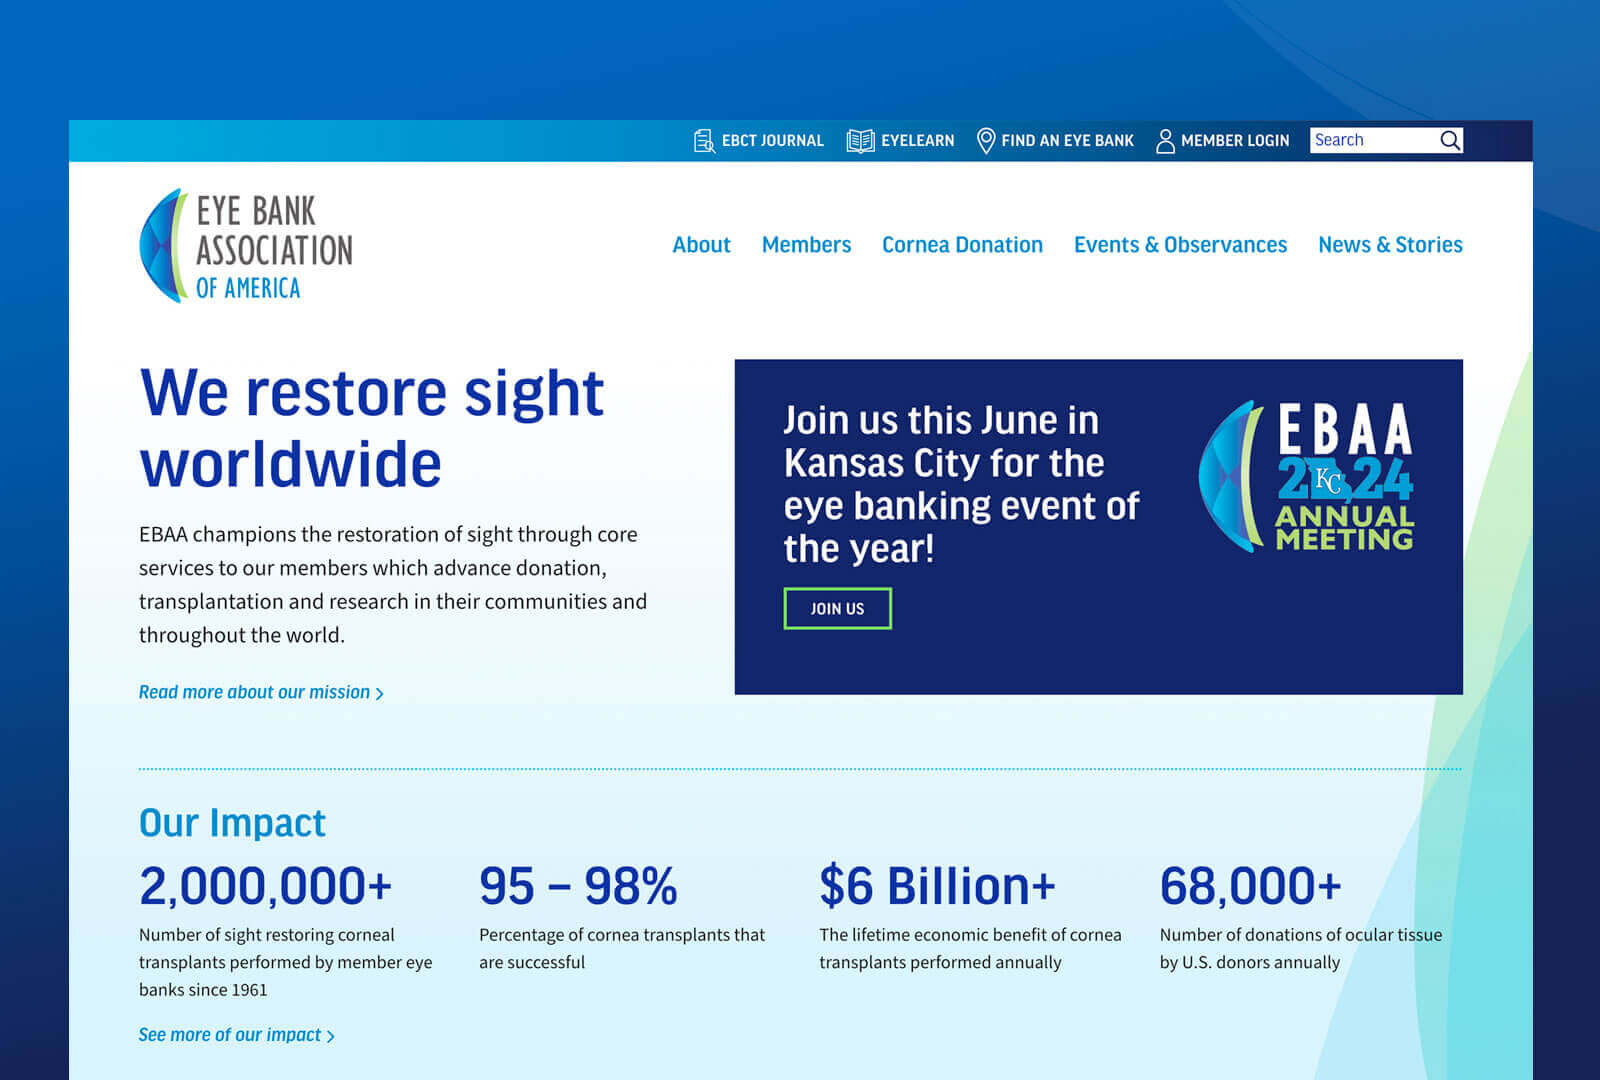 The homepage of restoresight.org